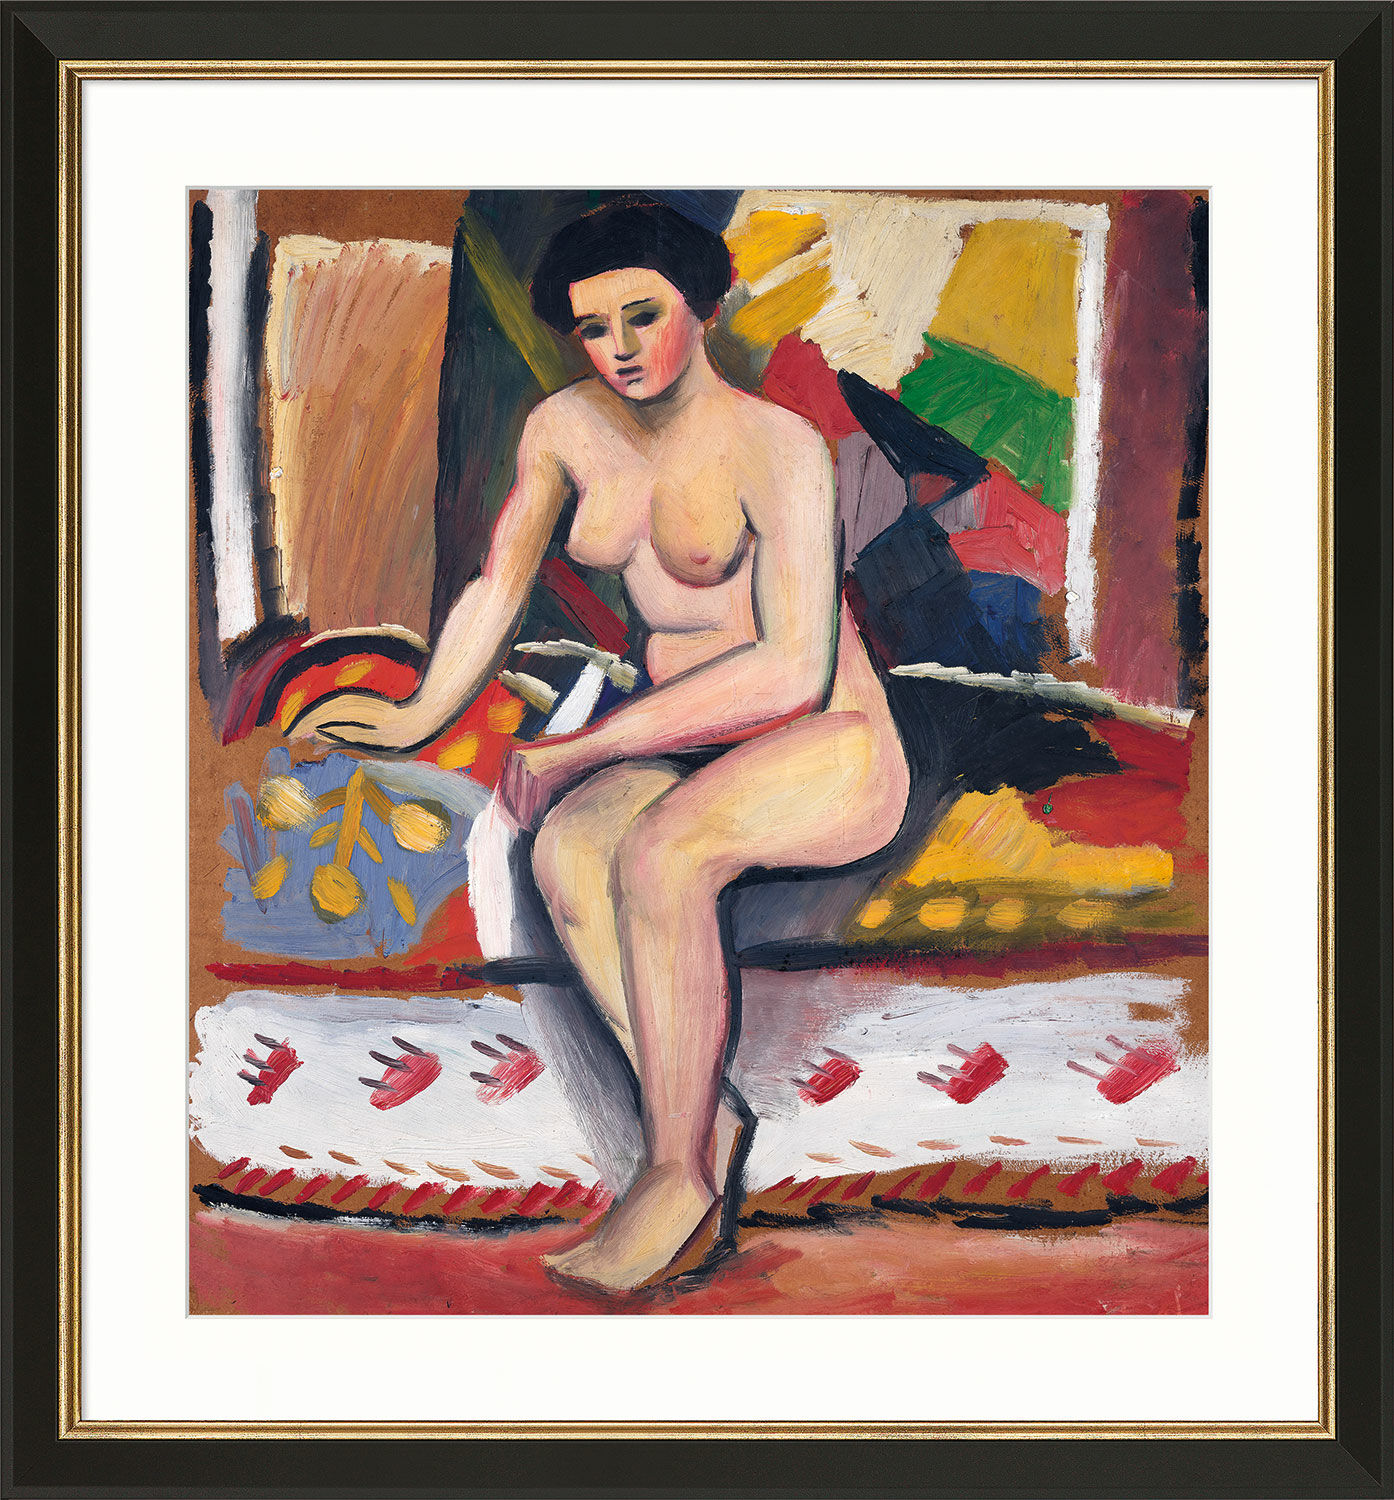 Billedet "Nude" (1913), sort og gylden indrammet version von August Macke